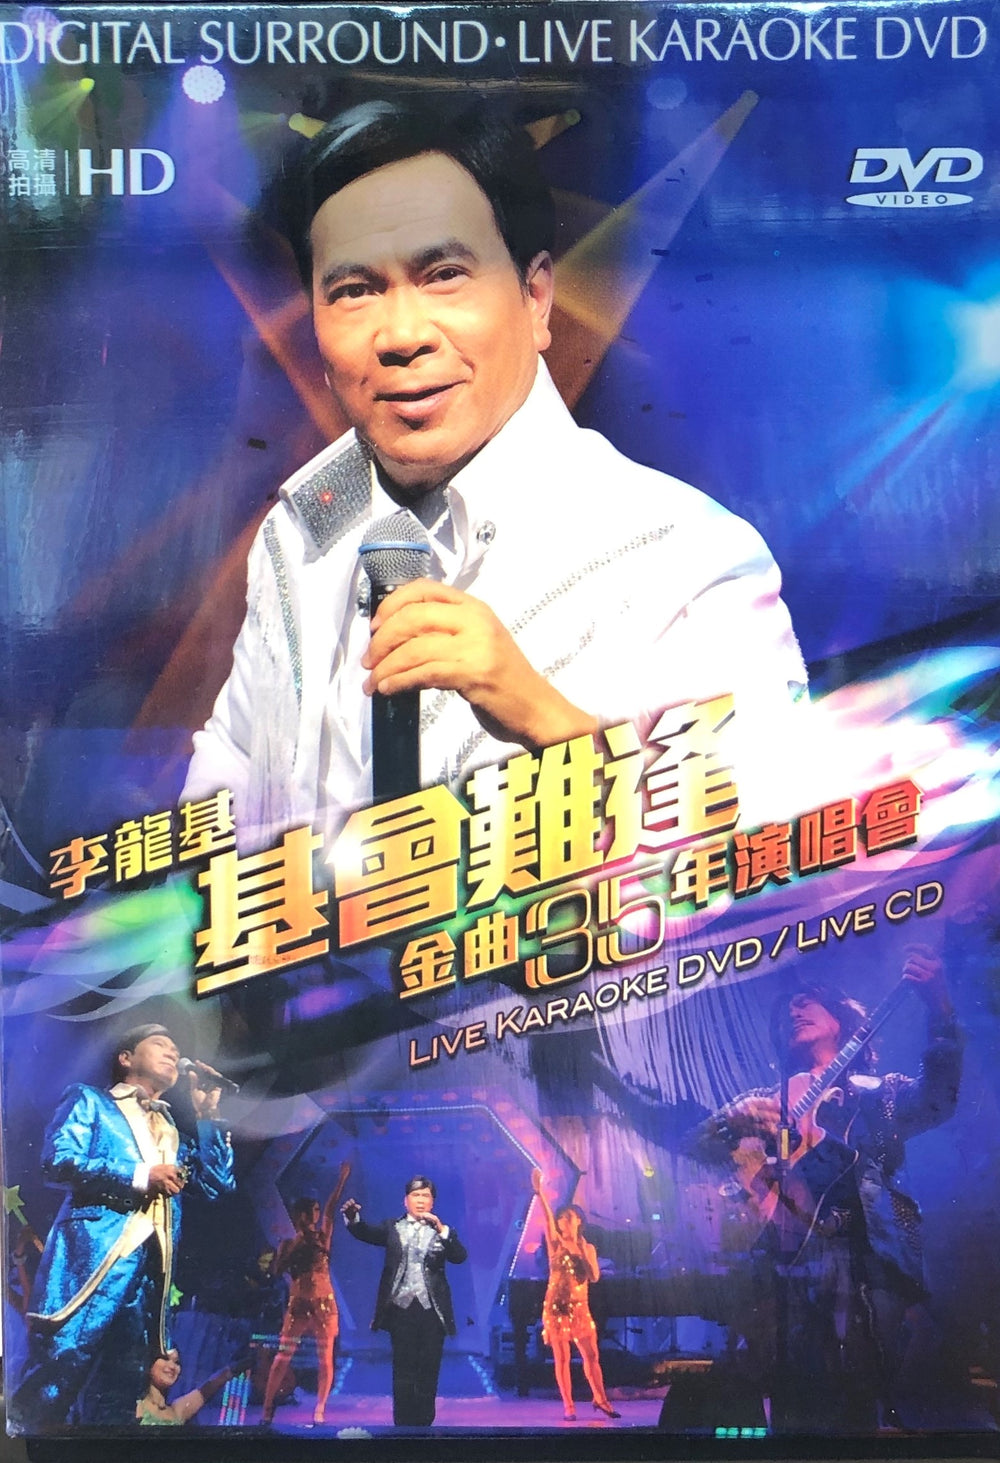 LEE LUNG KEE - 李龍基基會難逢金曲35年演唱會 (DVD & CD) REGION FREE